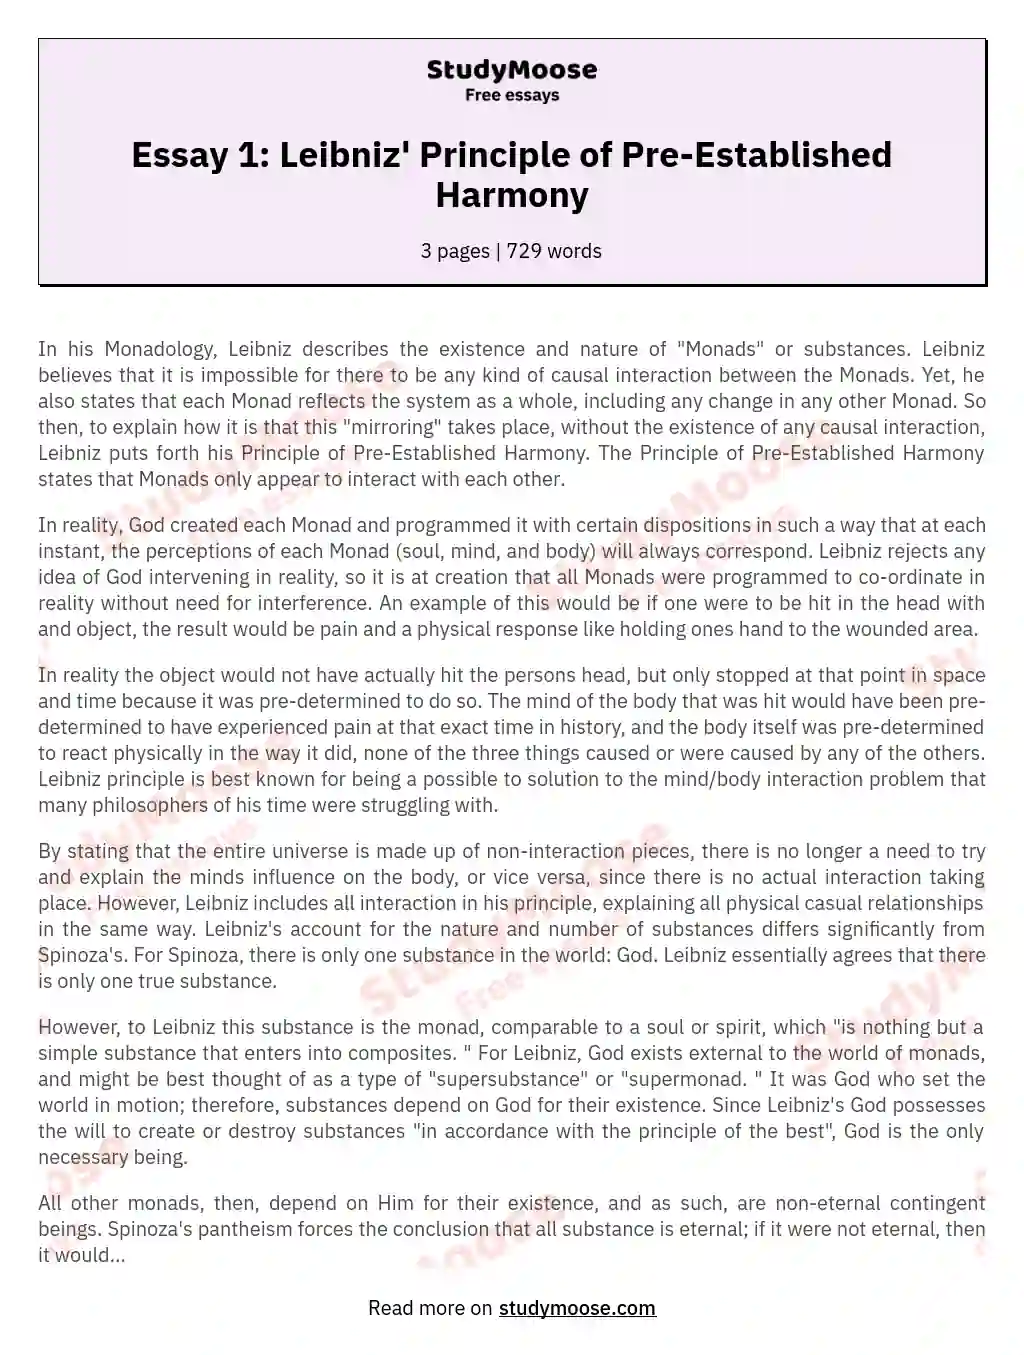 Essay 1: Leibniz' Principle of Pre-Established Harmony essay